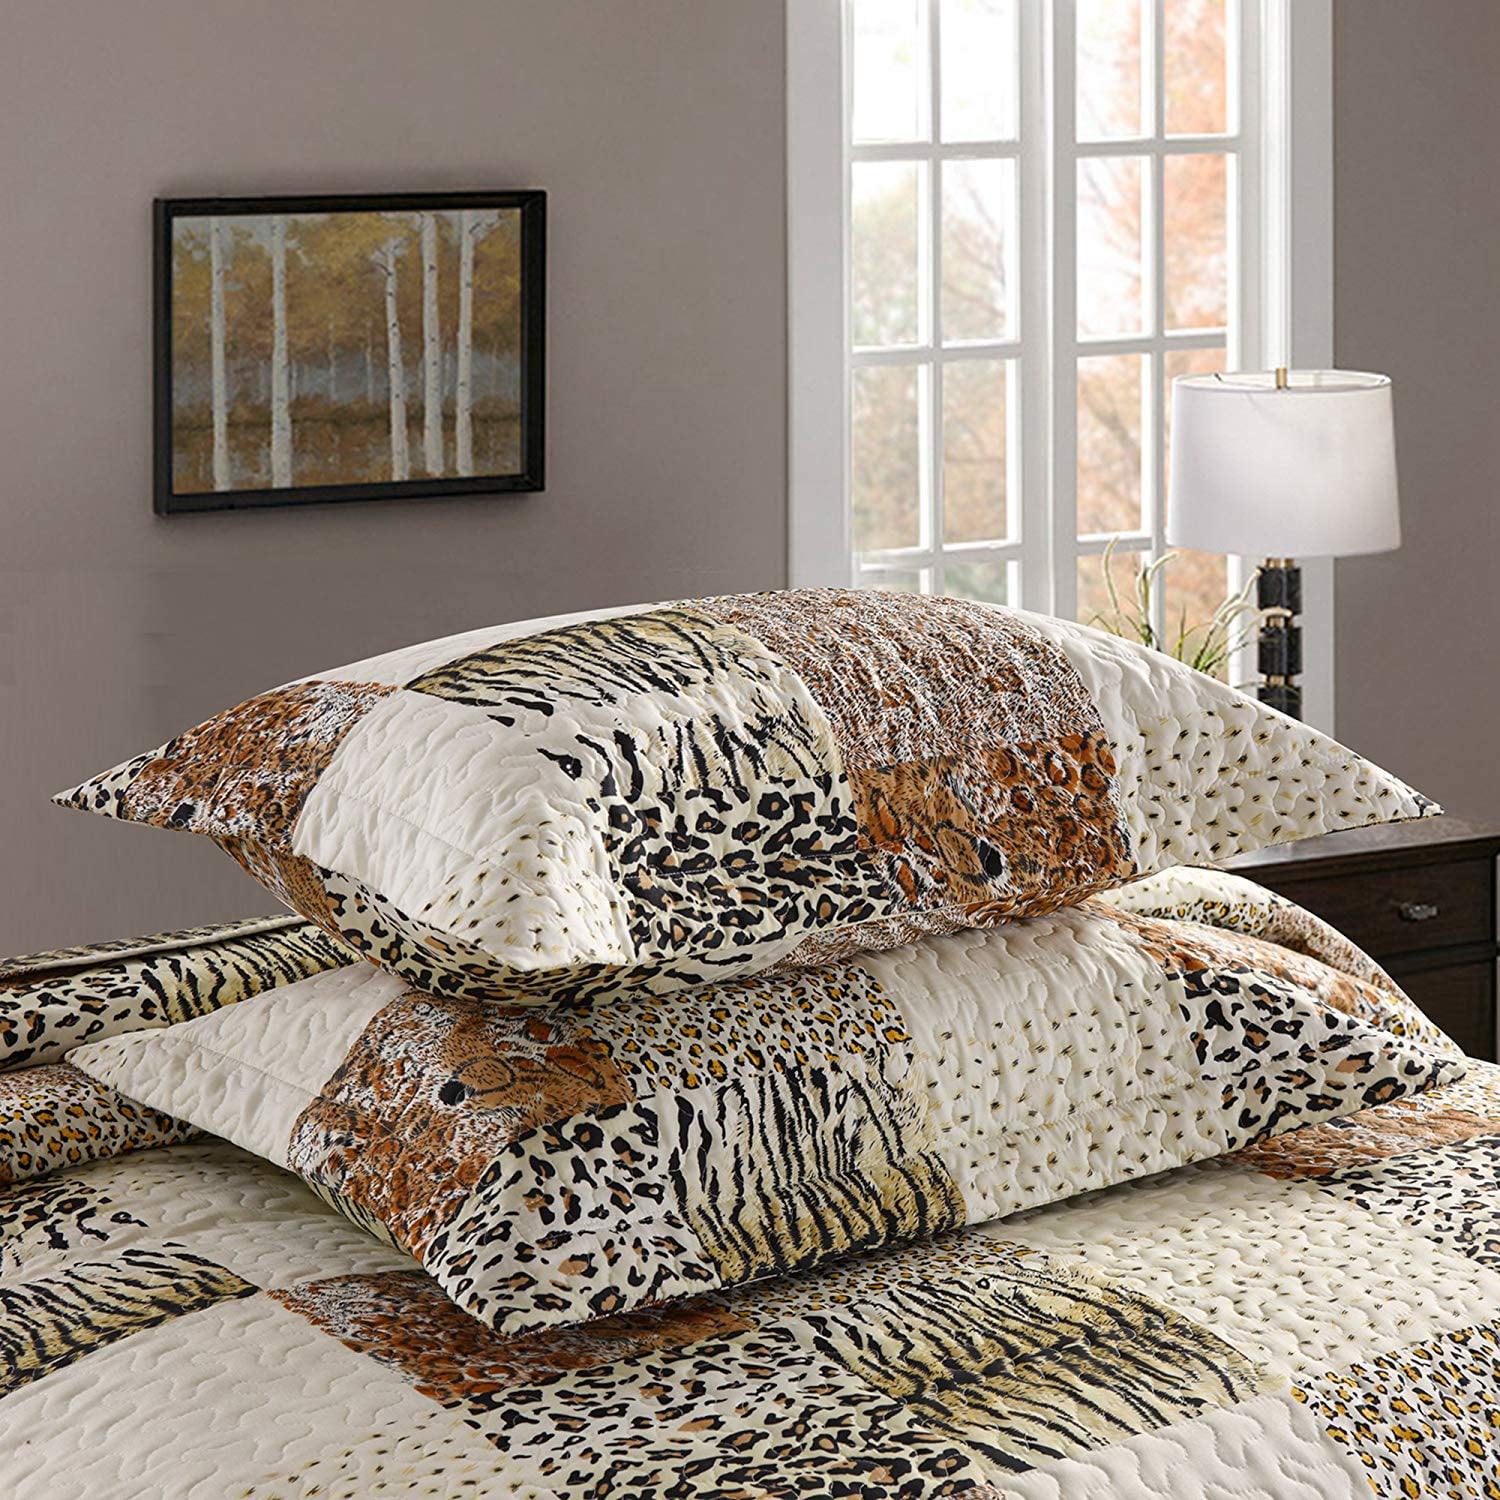 Quilt Set Leopard Ensemble Animal (Queen) Print 3 MarCielo Throw Blanket Bedding Quilted Piece Bedspread Print Coverlet Quilt Cheetah Bedspread